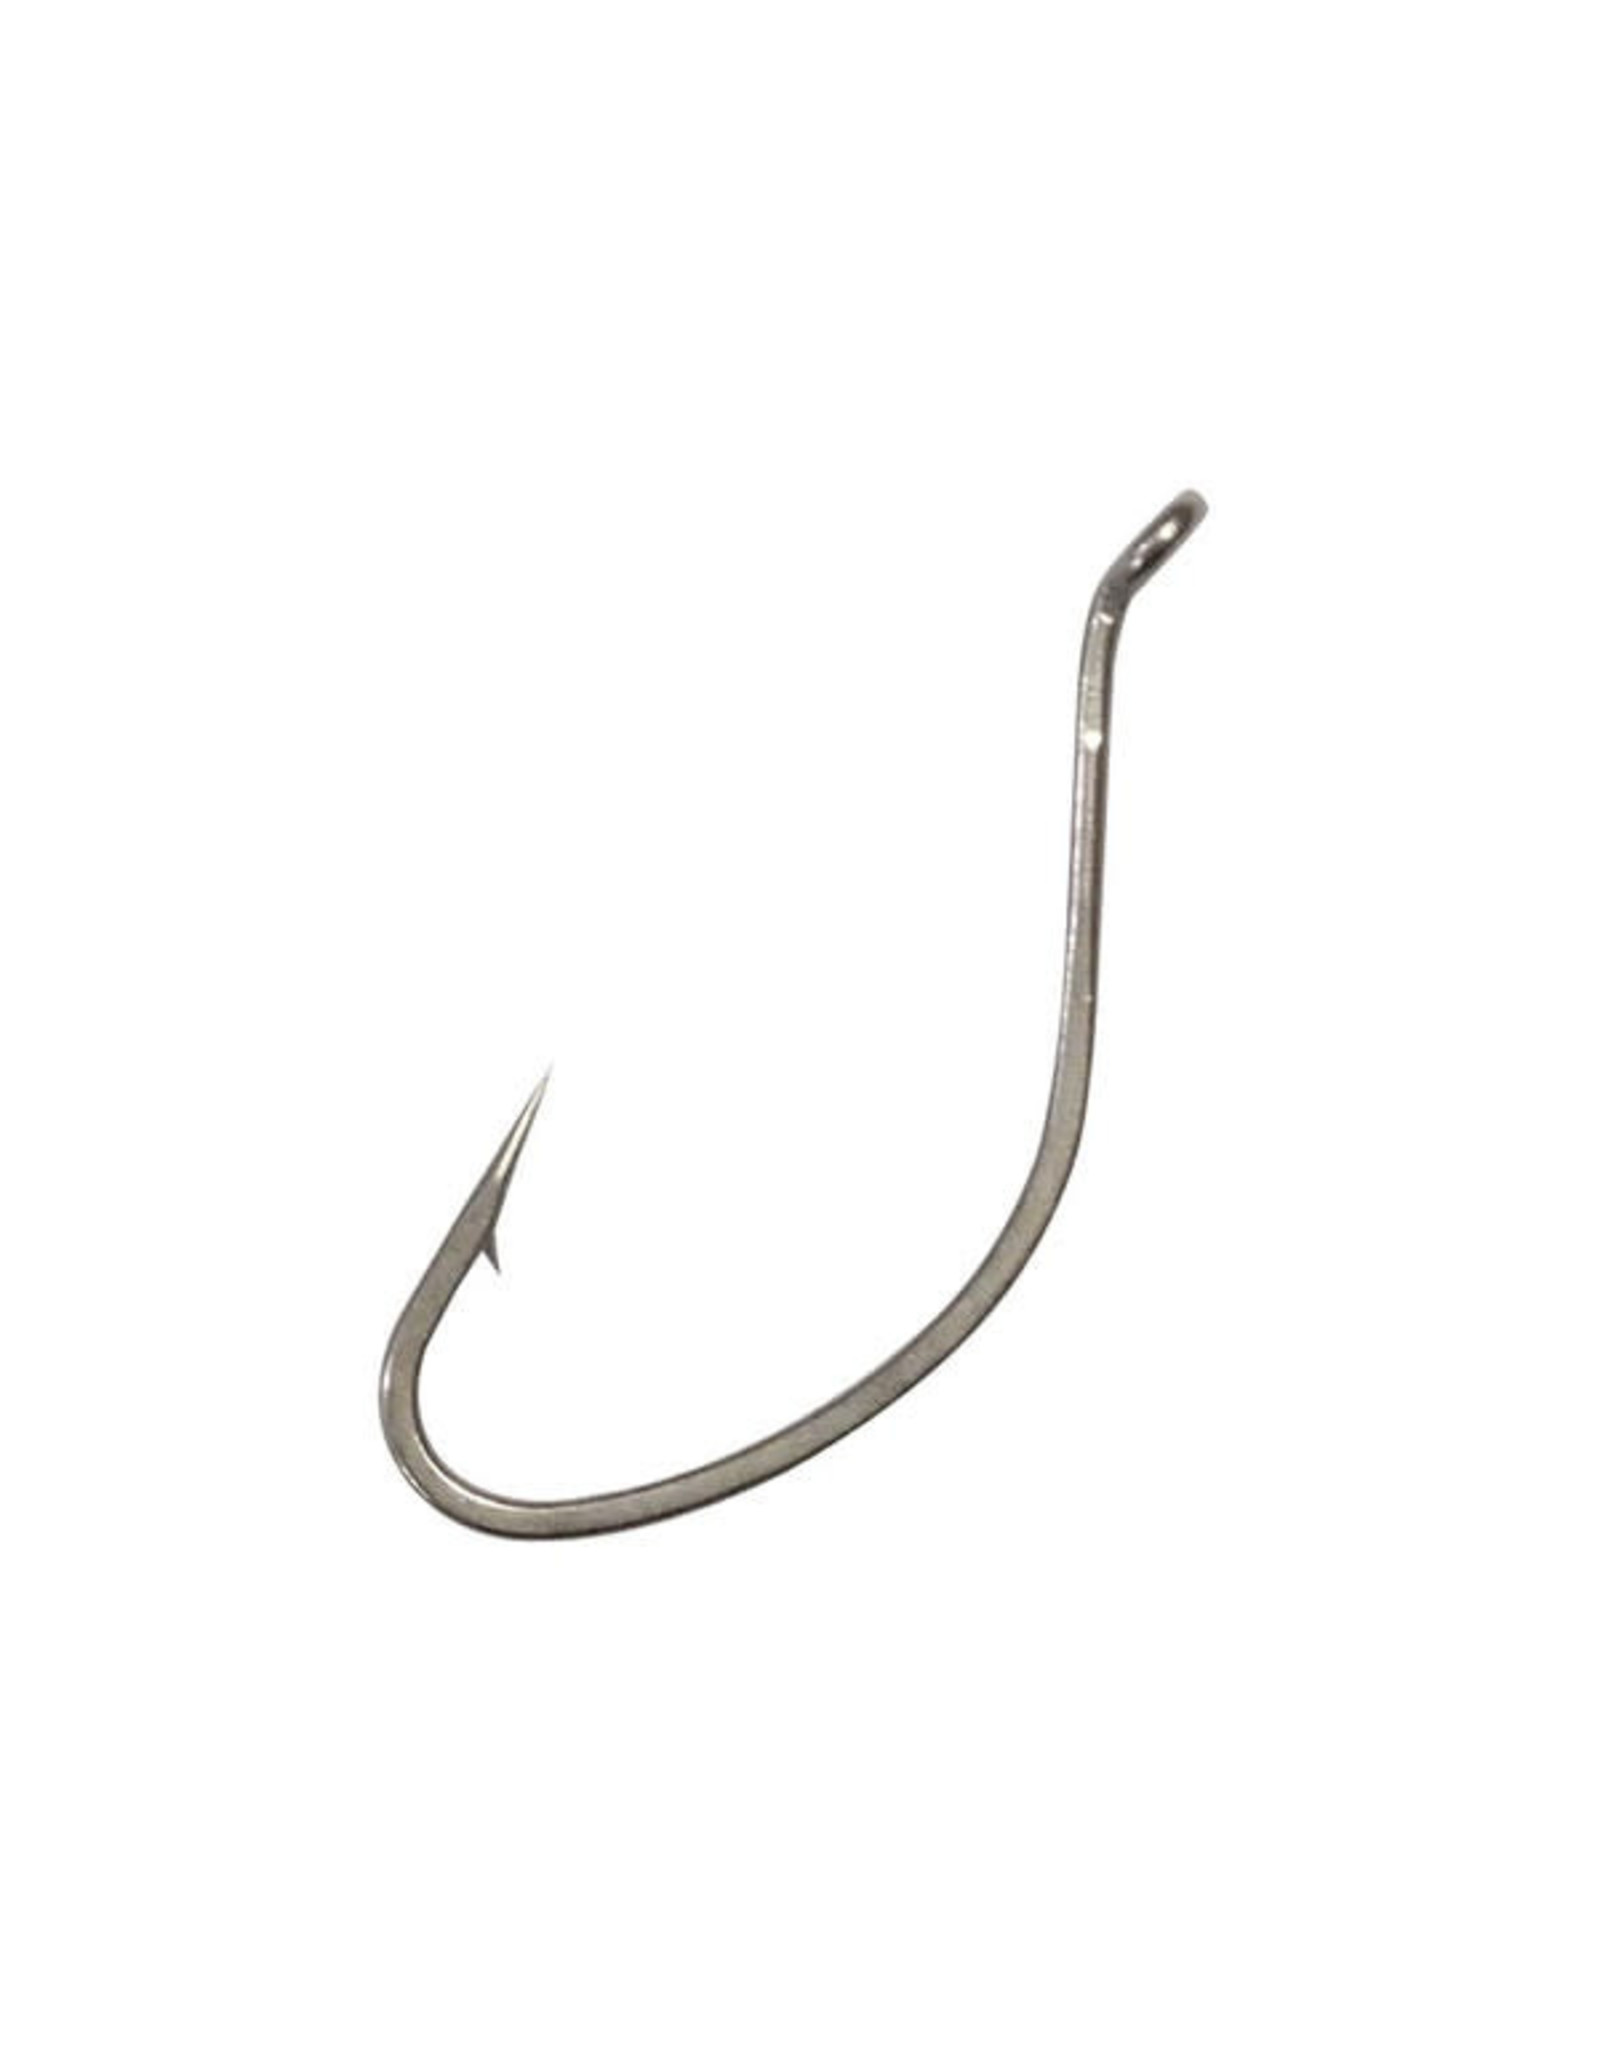 Gamakatsu 262107 Trout Worm Hook Size 6, Needle Point, Ringed Eye Bronze,  10pk - Bronson